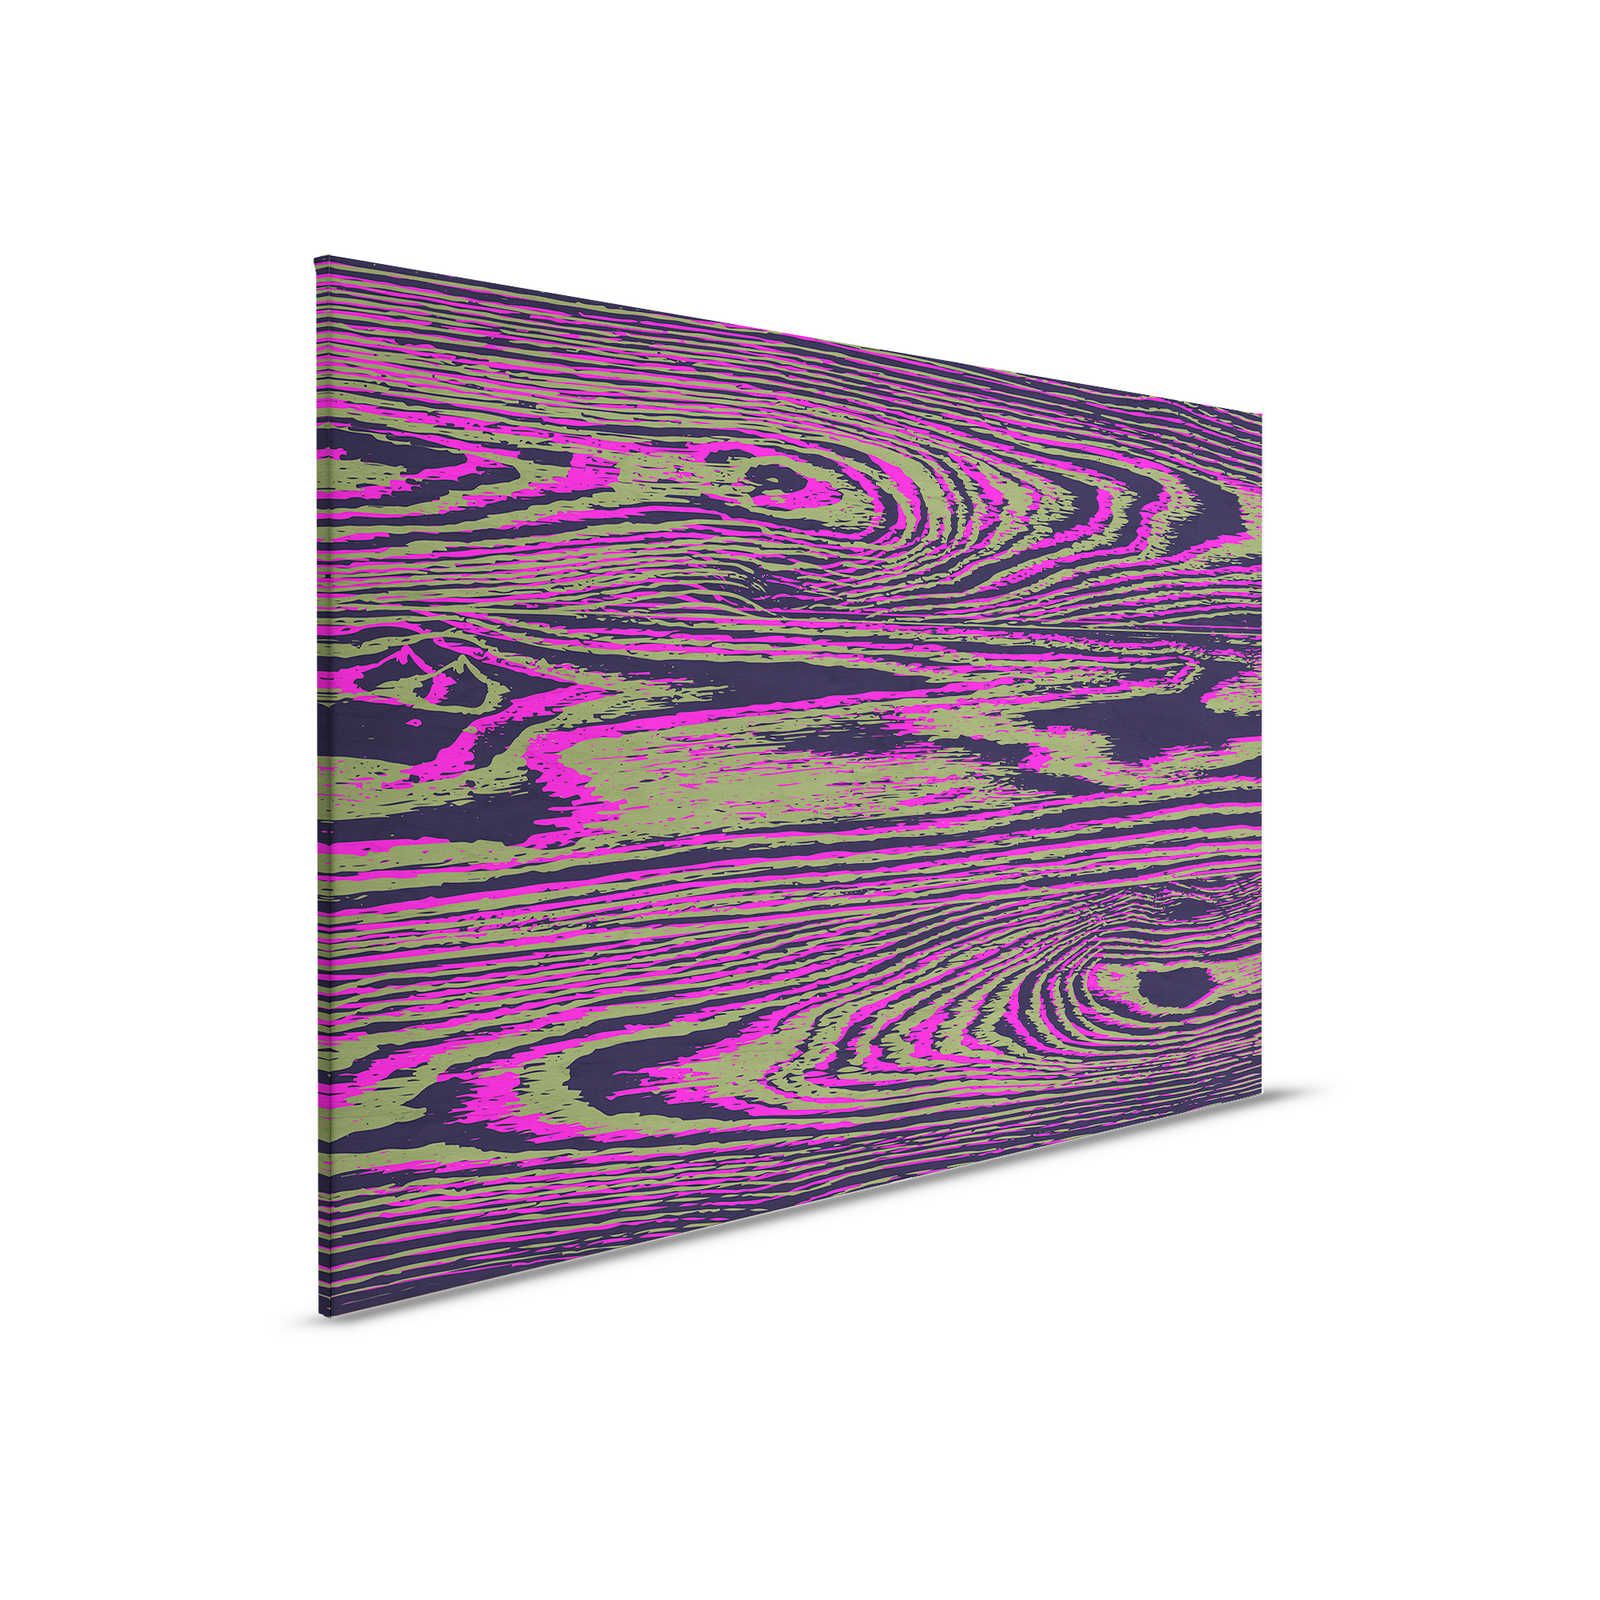         Kontiki 2 - Canvas painting Neon Wood Grain, Pink & Black - 0.90 m x 0.60 m
    